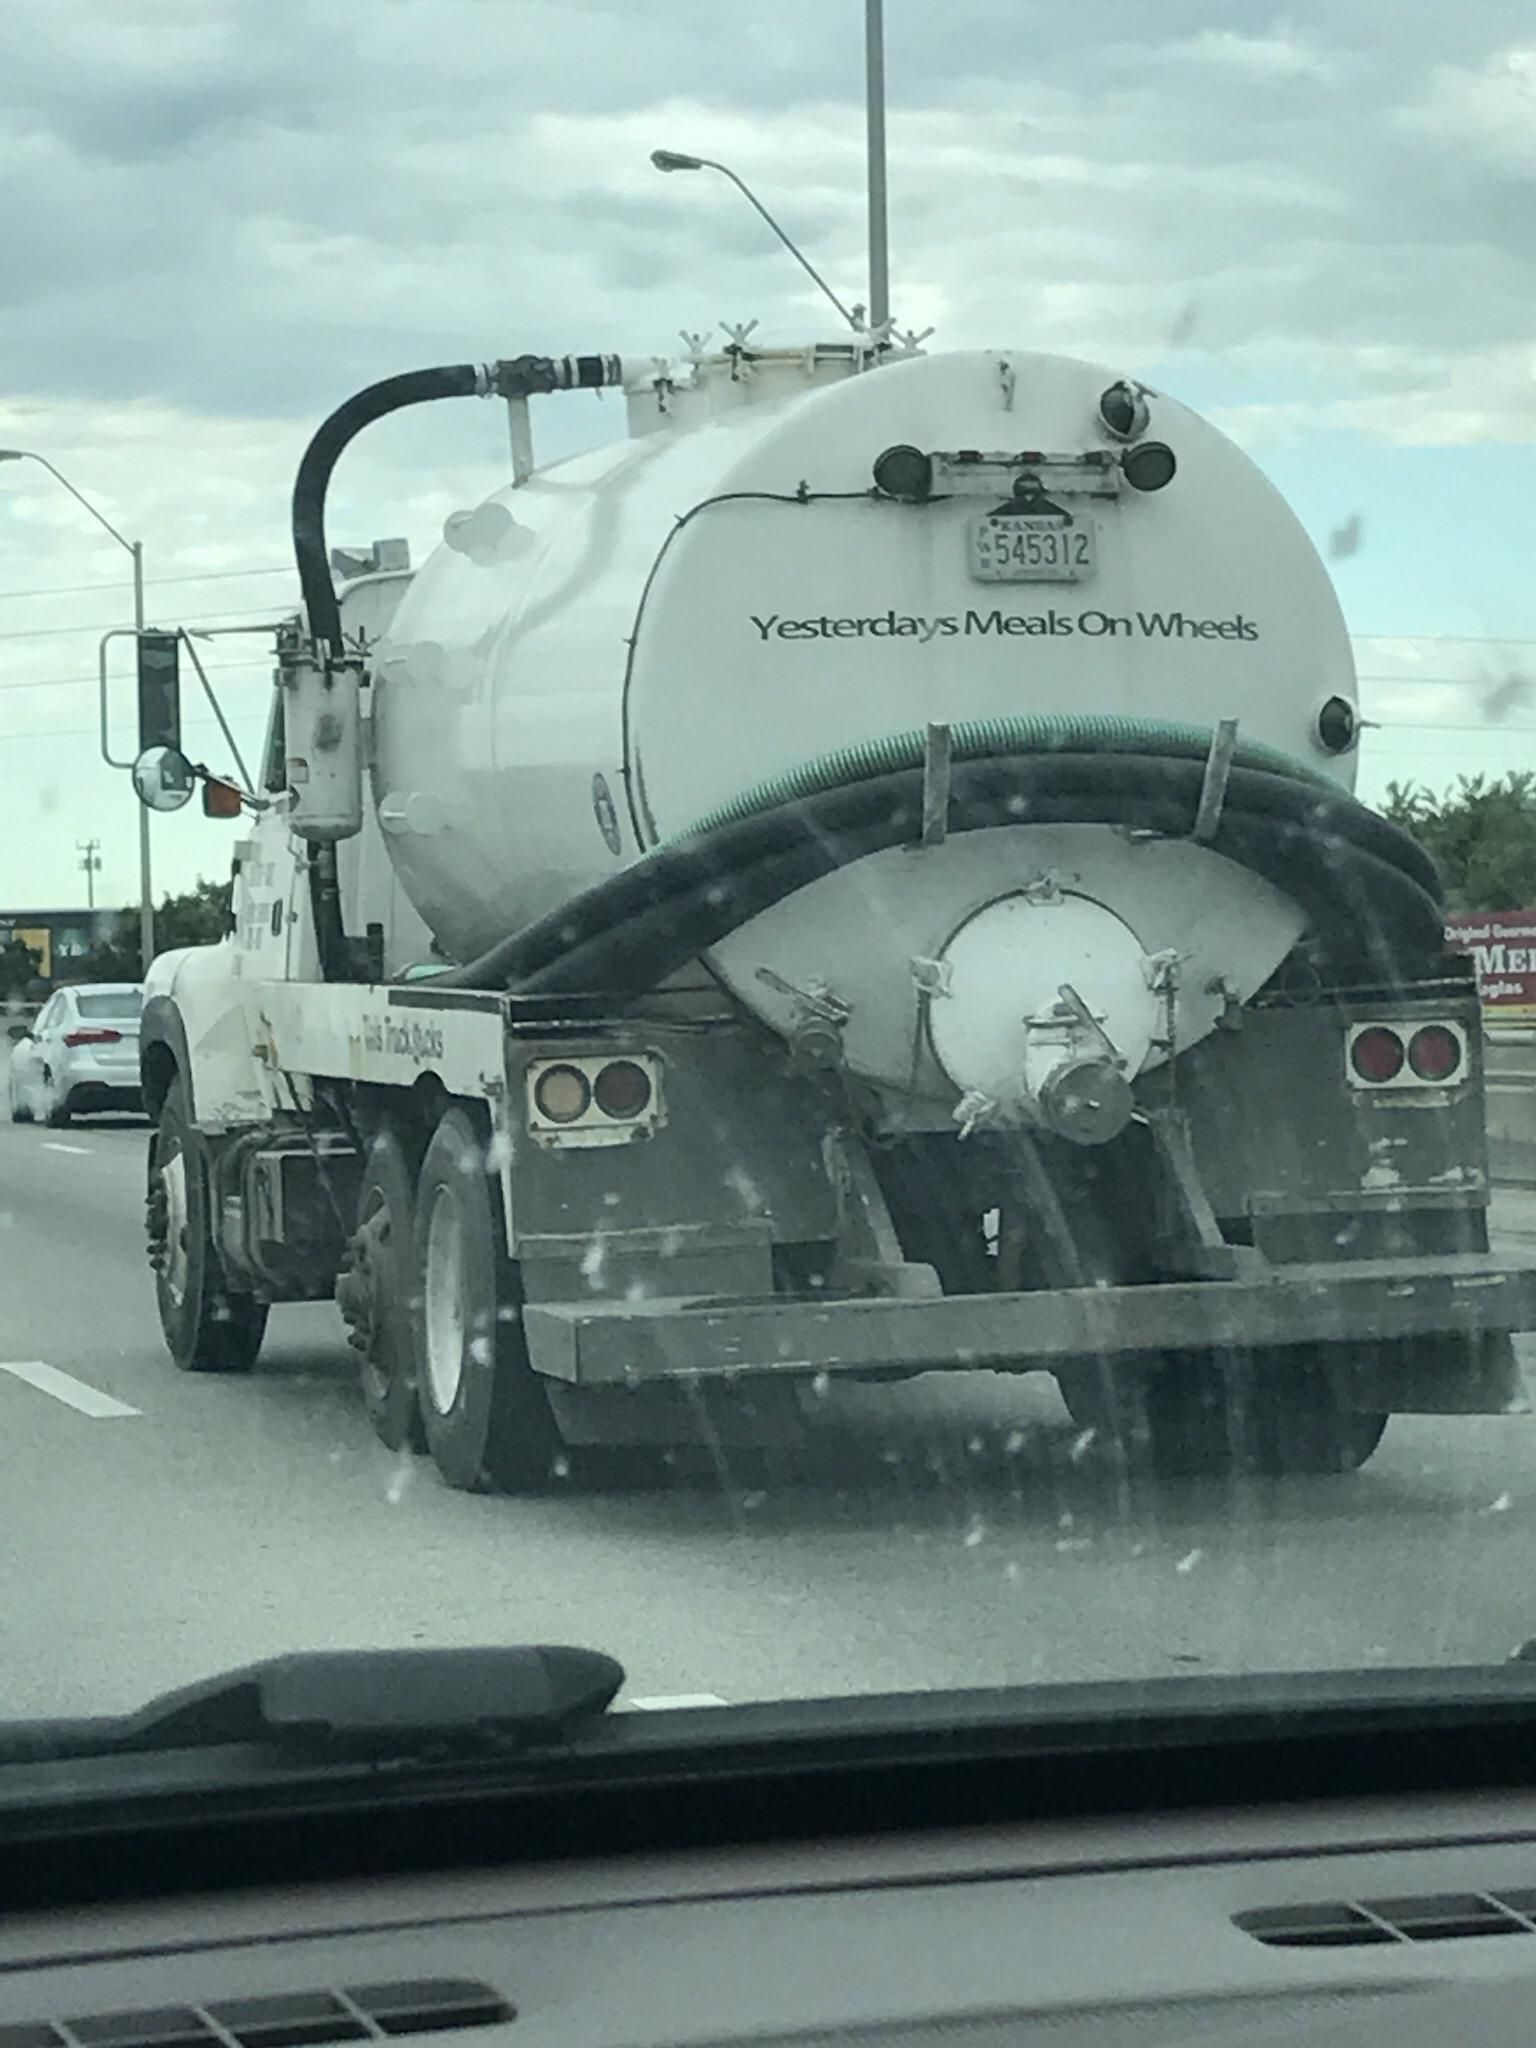 Brilliant sewage company slogan.